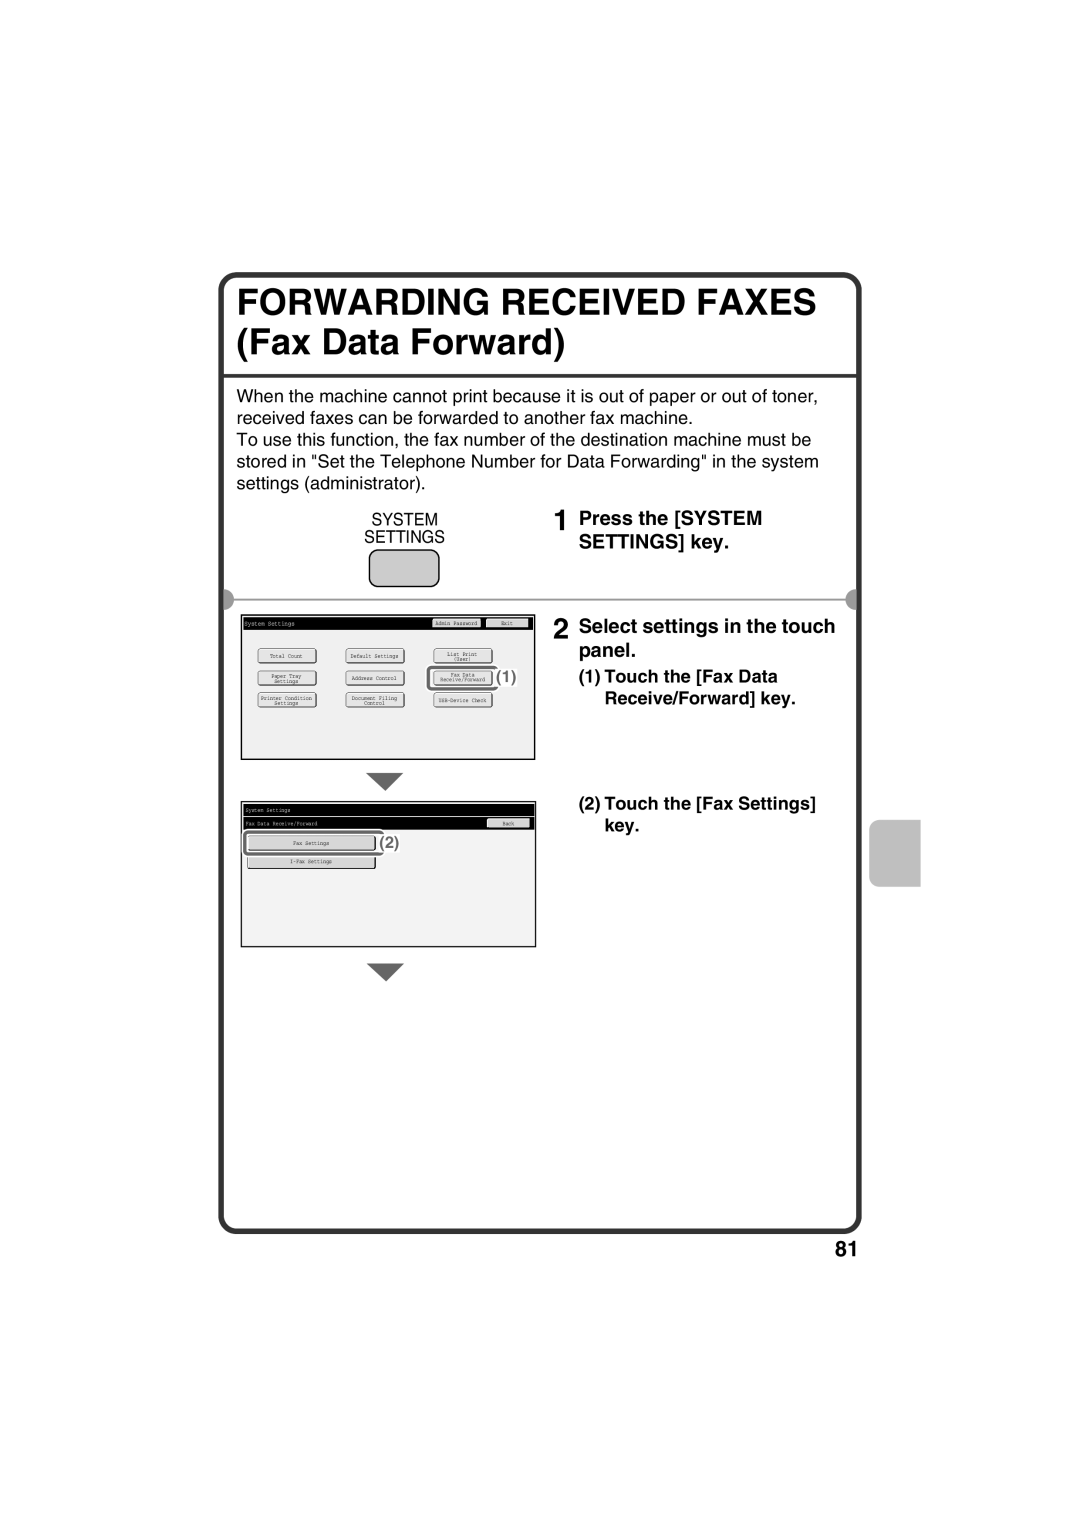 Sharp TINSE4377FCZZ FORWARDING RECEIVED FAXES Fax Data Forward, Touch the Fax Data Receive/Forward key, SETTINGS key 